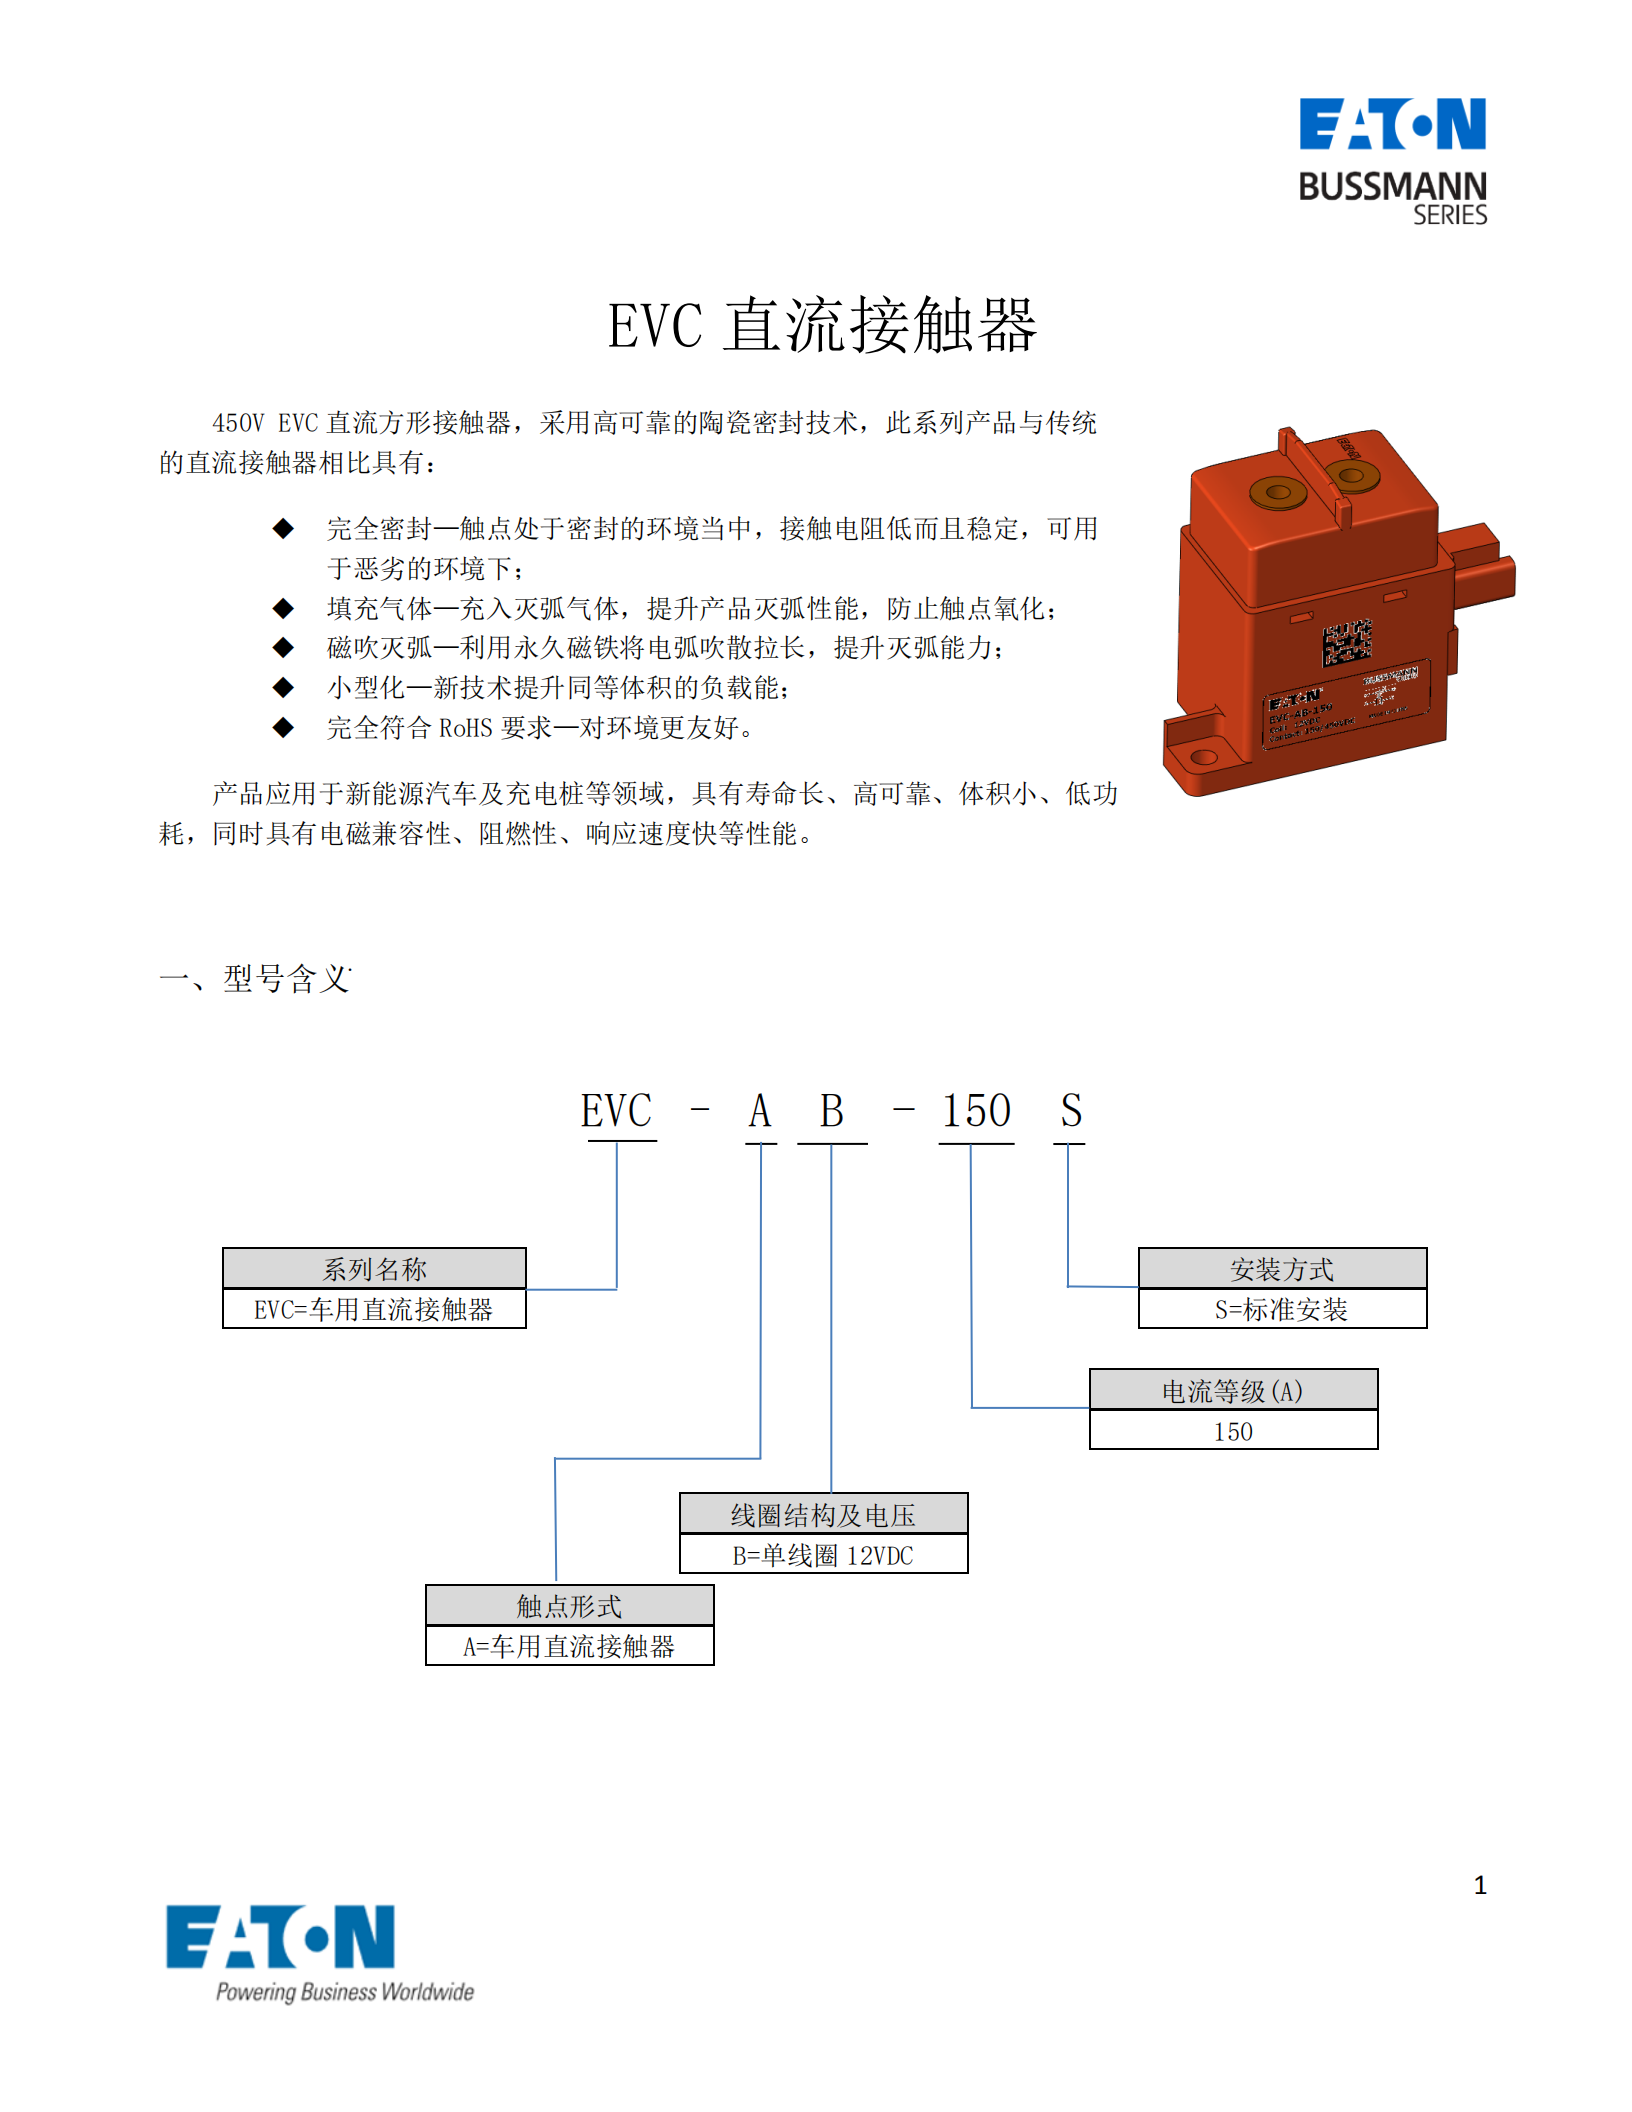 EVC-AB-150S直流接触器